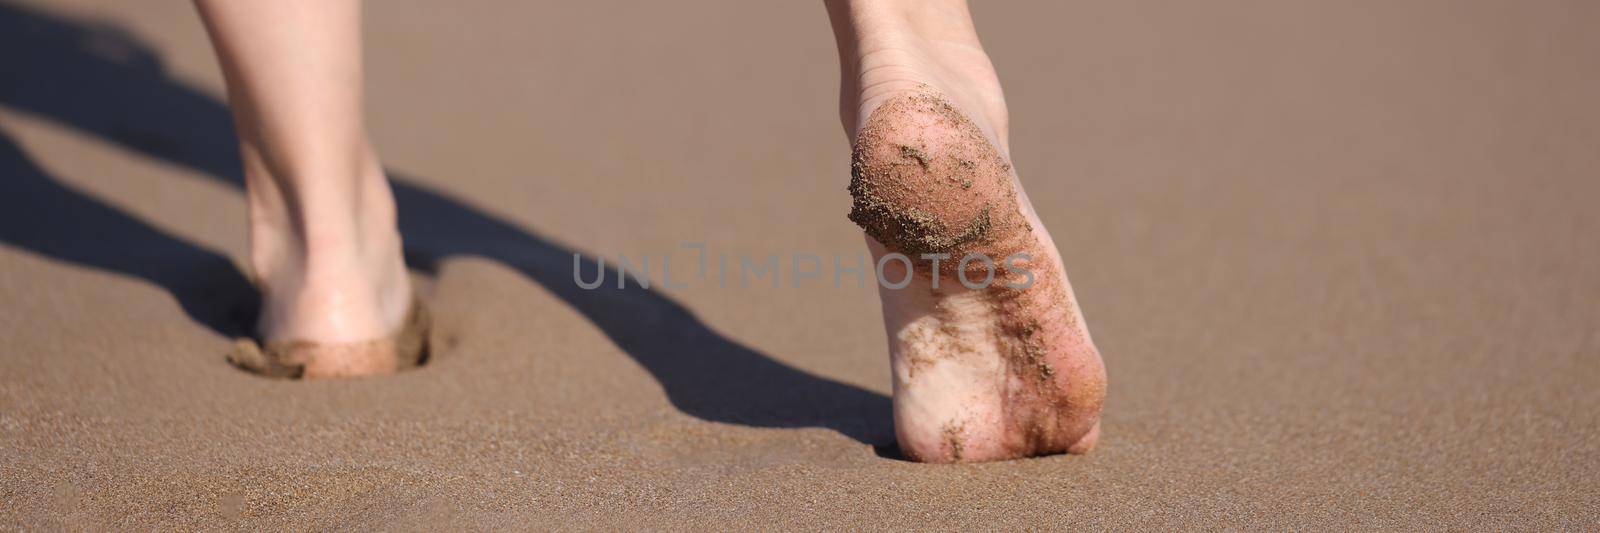 Female bare feet walking along seaside closeup. Boat trips concept